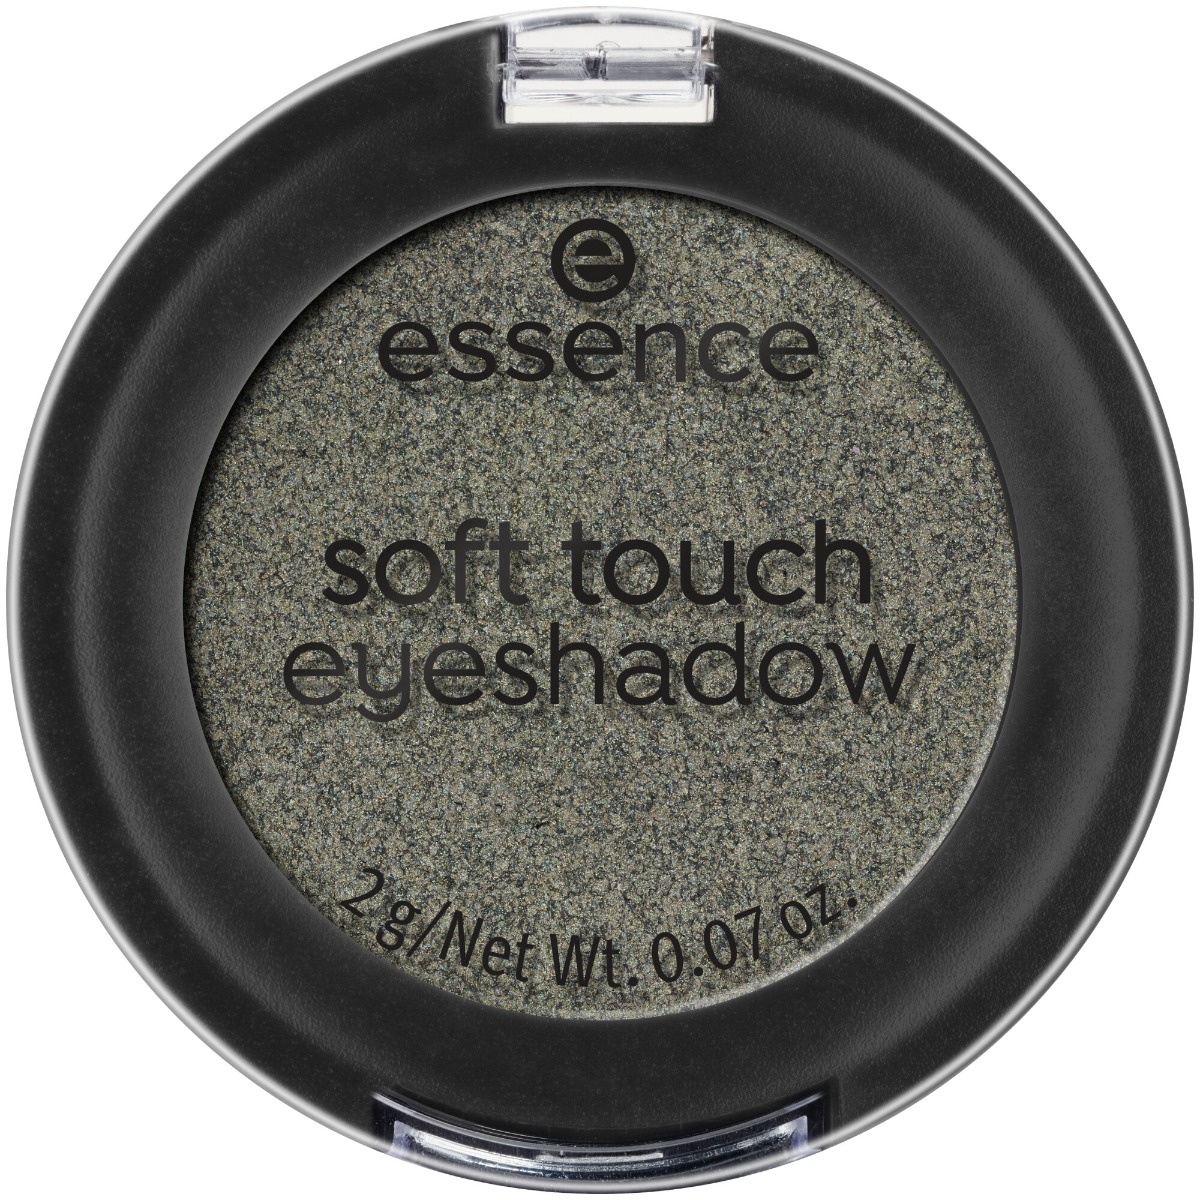 Fard de pleoape Soft Touch 05 - Secret Woods, 2g, Essence